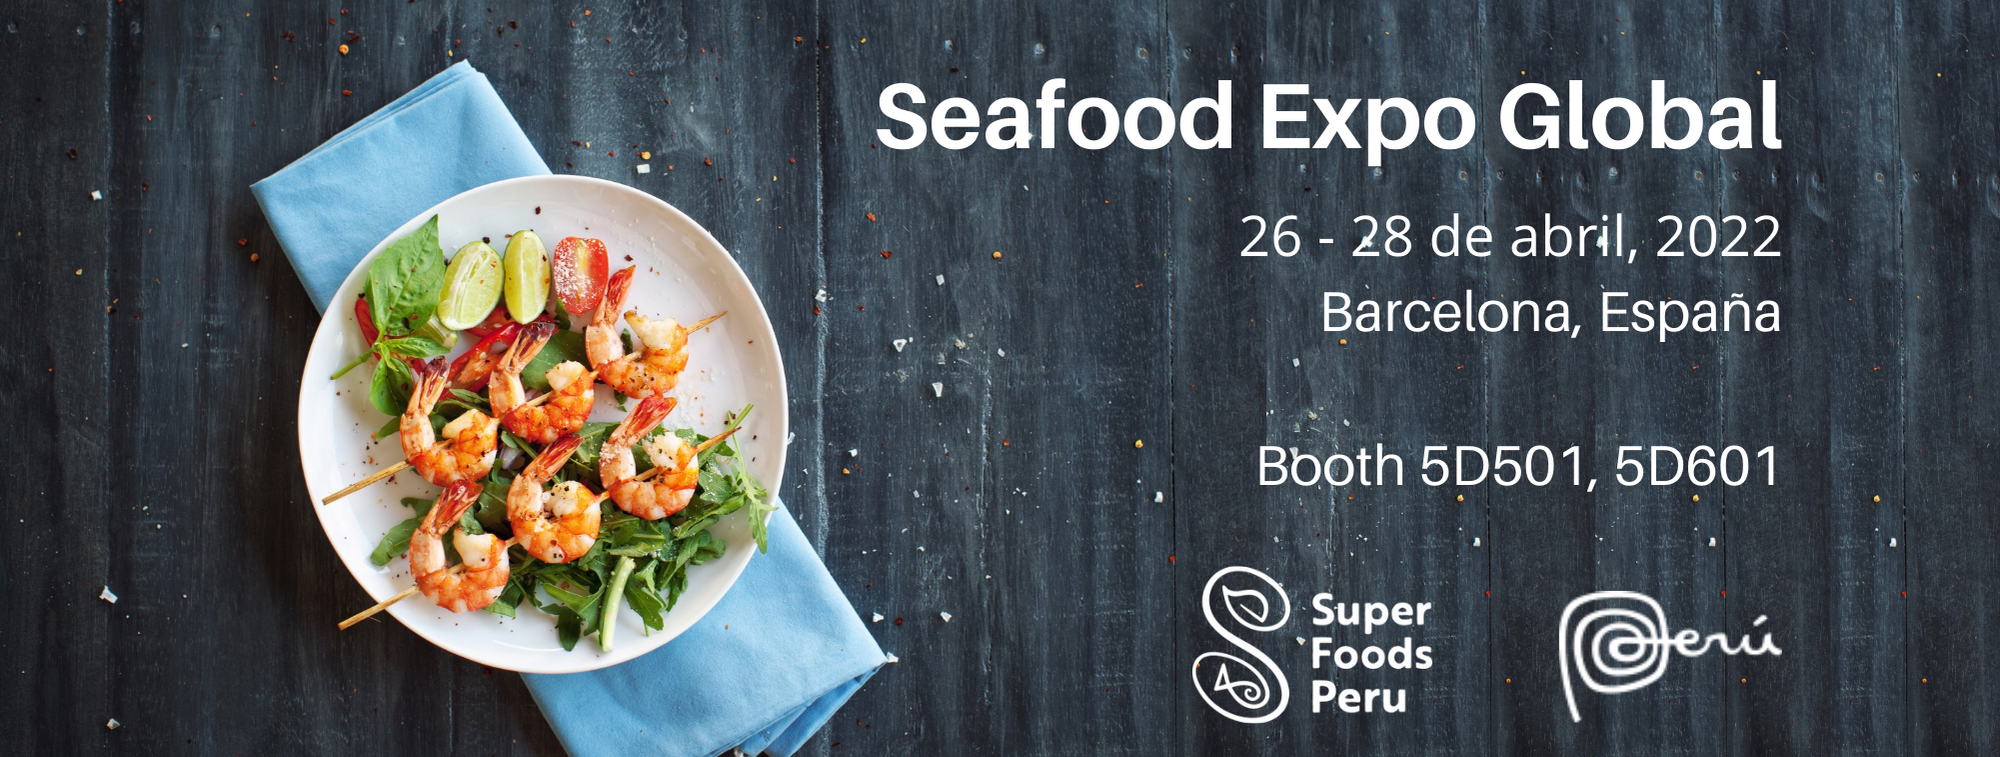 Perú en la Seafood Expo Global 2022